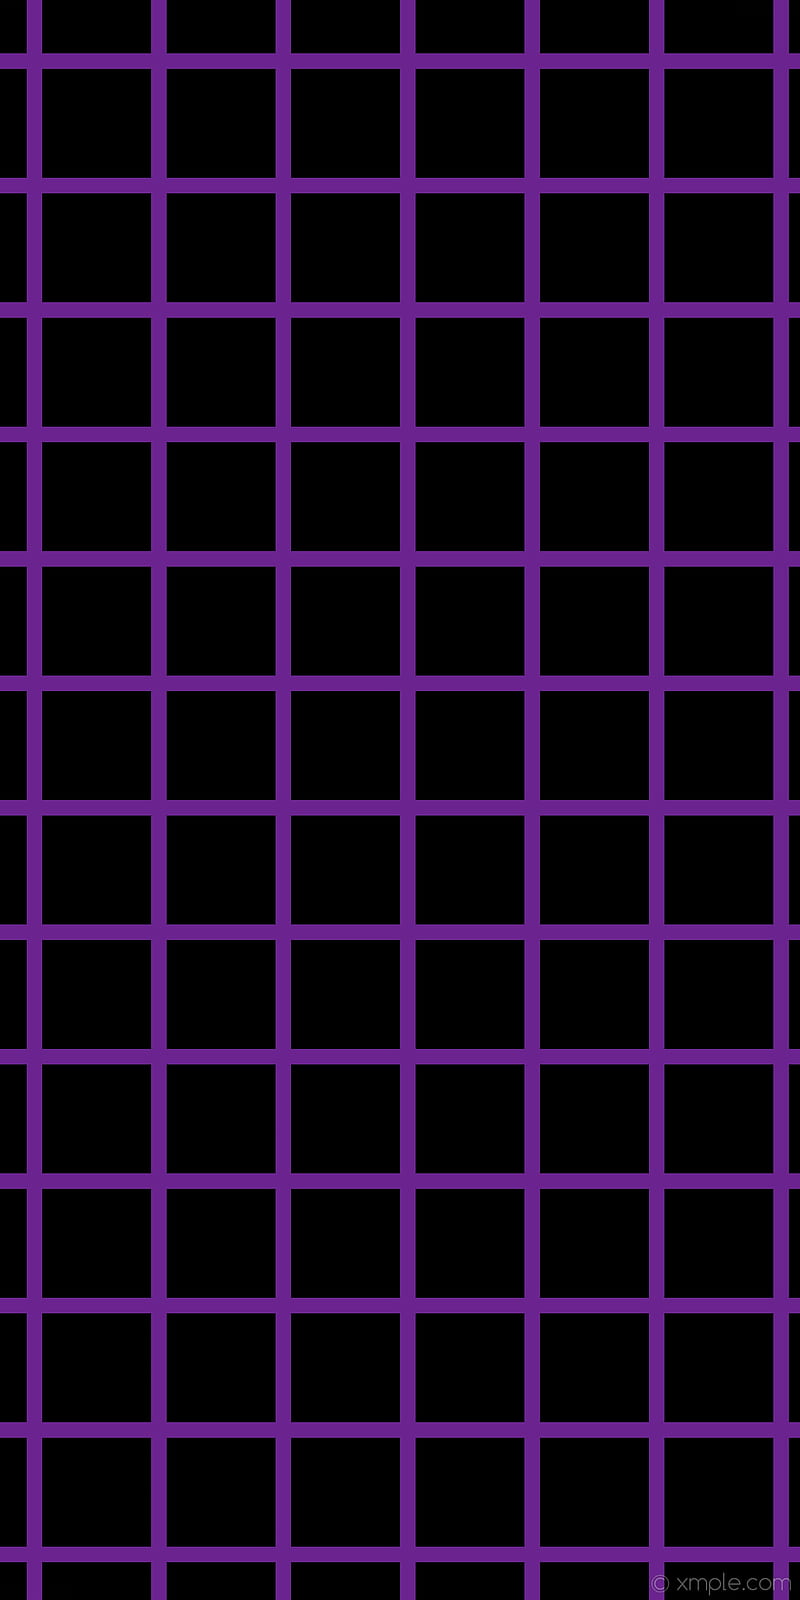 A purple grid with black squares - Grid